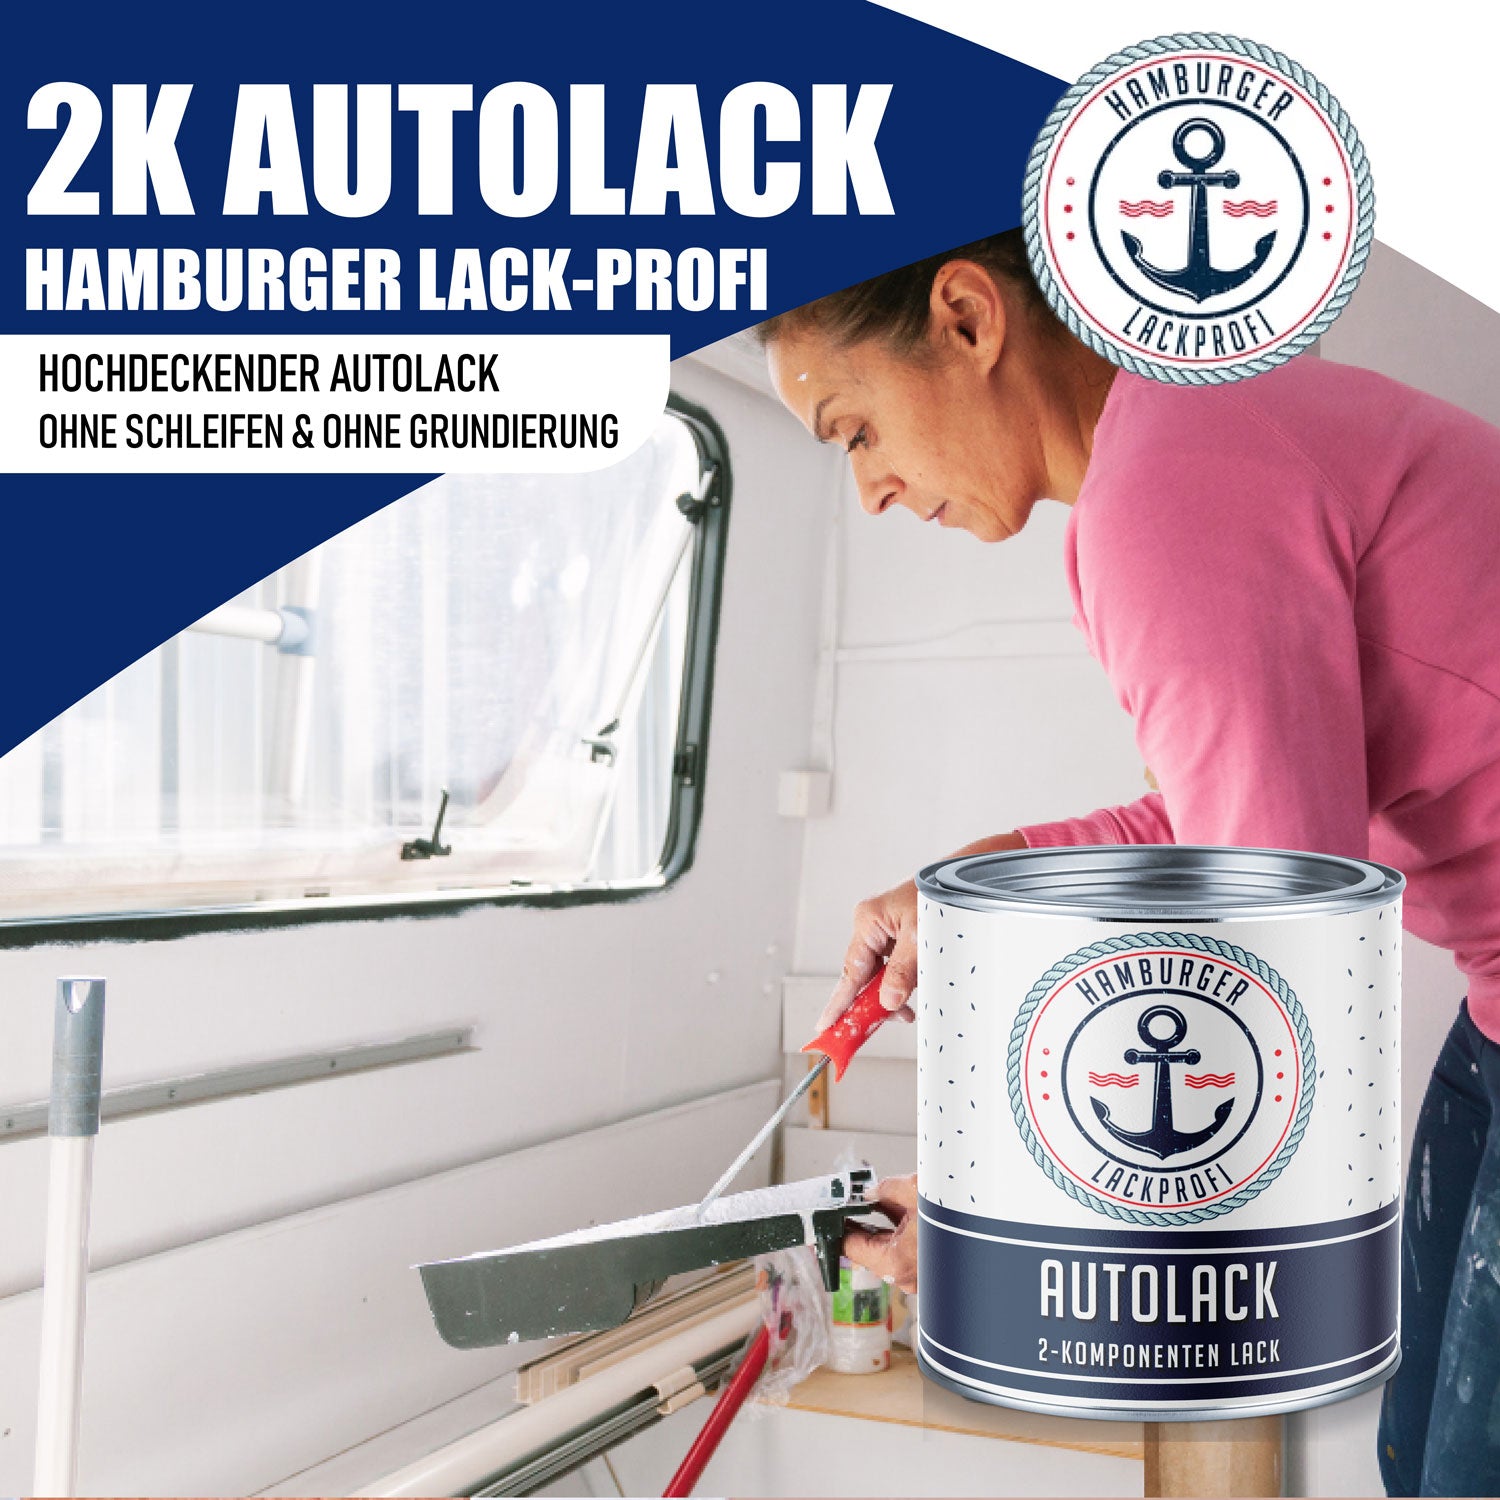 Hamburger Lack-Profi 2K Autolack in Altrosa RAL 3014 mit Lackierset (X300) & Verdünnung (1 L) - 30% Sparangebot